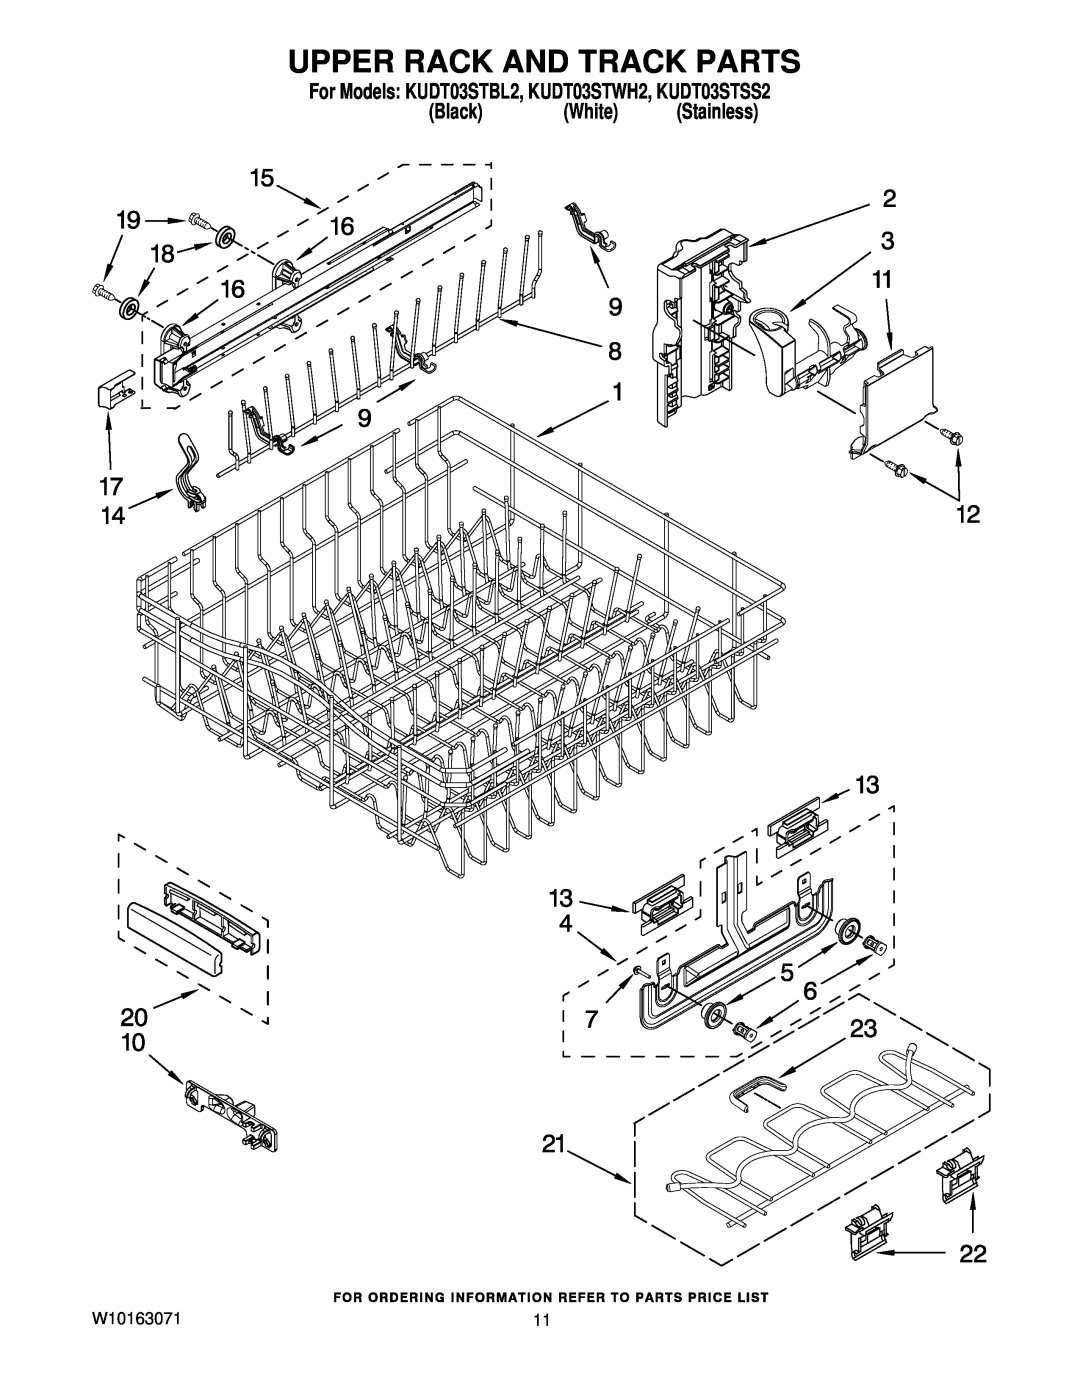 KitchenAid manual Upper Rack And Track Parts, For Models KUDT03STBL2, KUDT03STWH2, KUDT03STSS2, Black, White, Stainless 